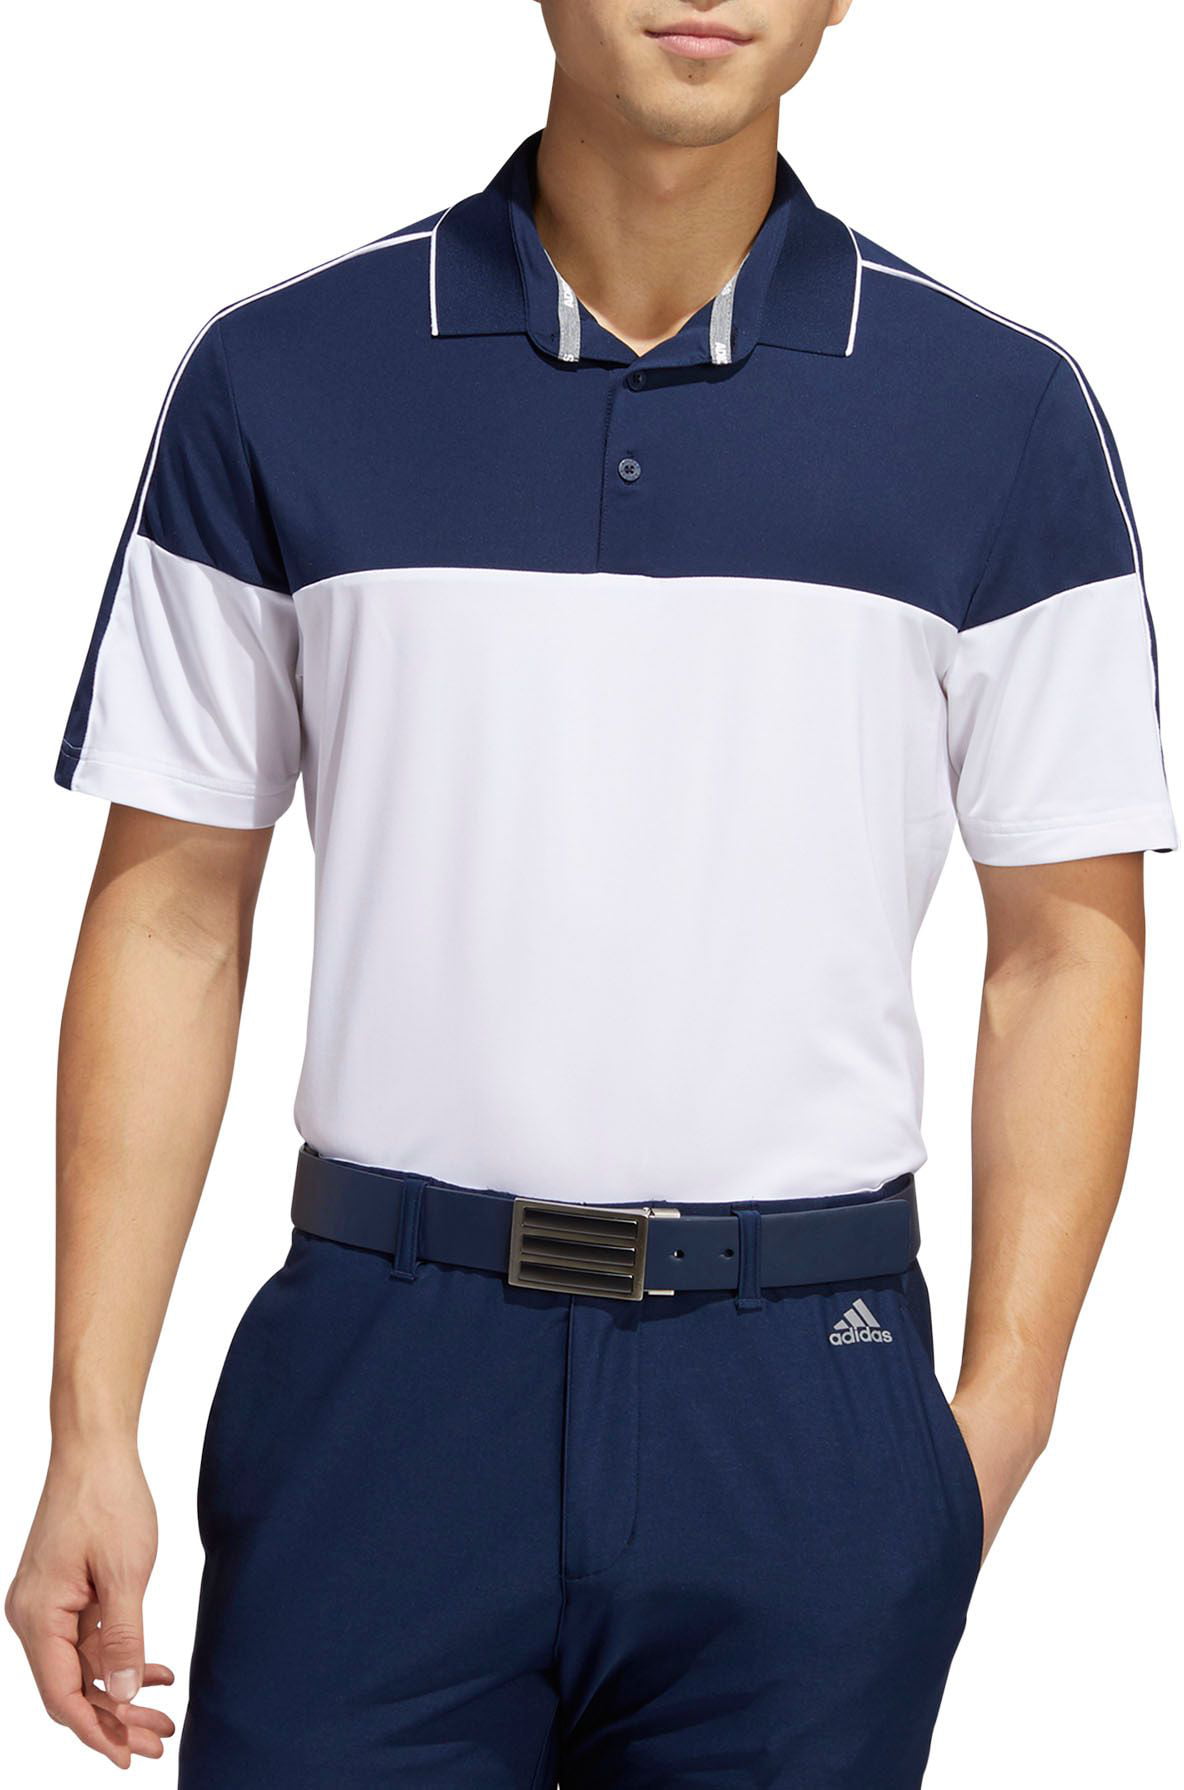 Adoración Excluir dolor de estómago adidas Men's Ultimate365 Striped Golf Polo, Collegiate Navy/White, L -  Walmart.com